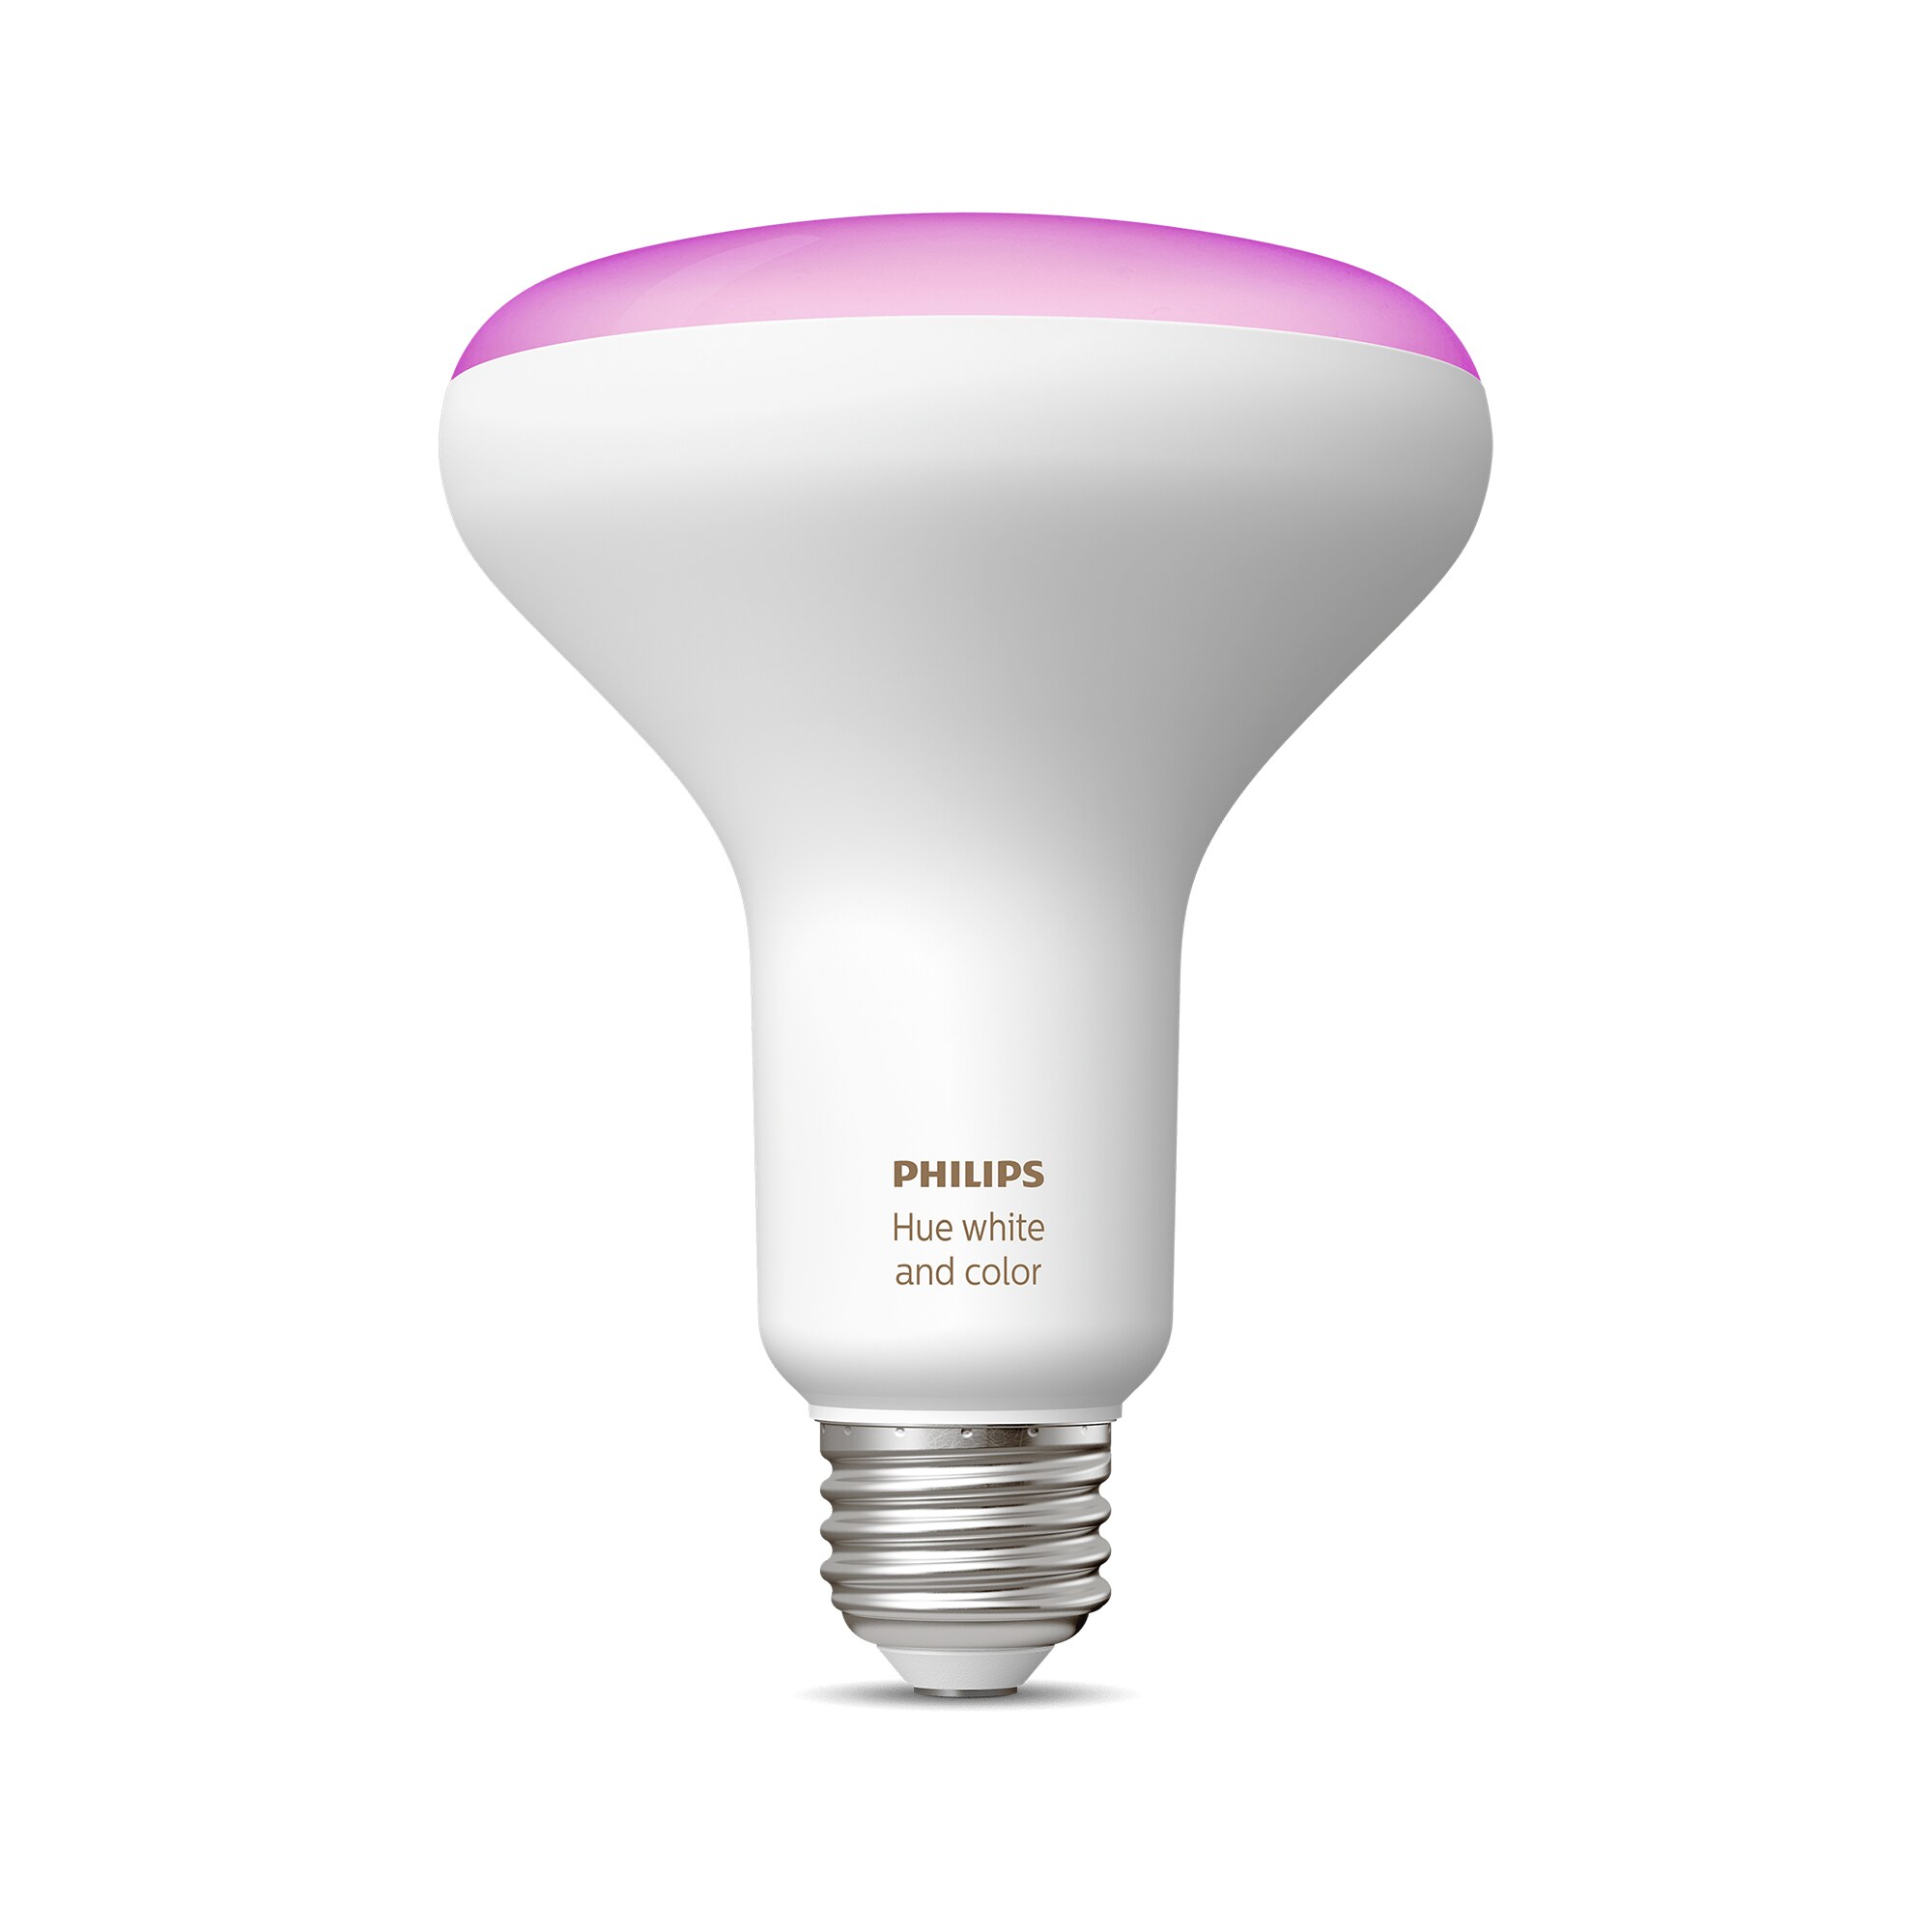 Philips Smart Full Color Wi-Fi LED 65 Watt Replacement Bulb 650 Lumens 